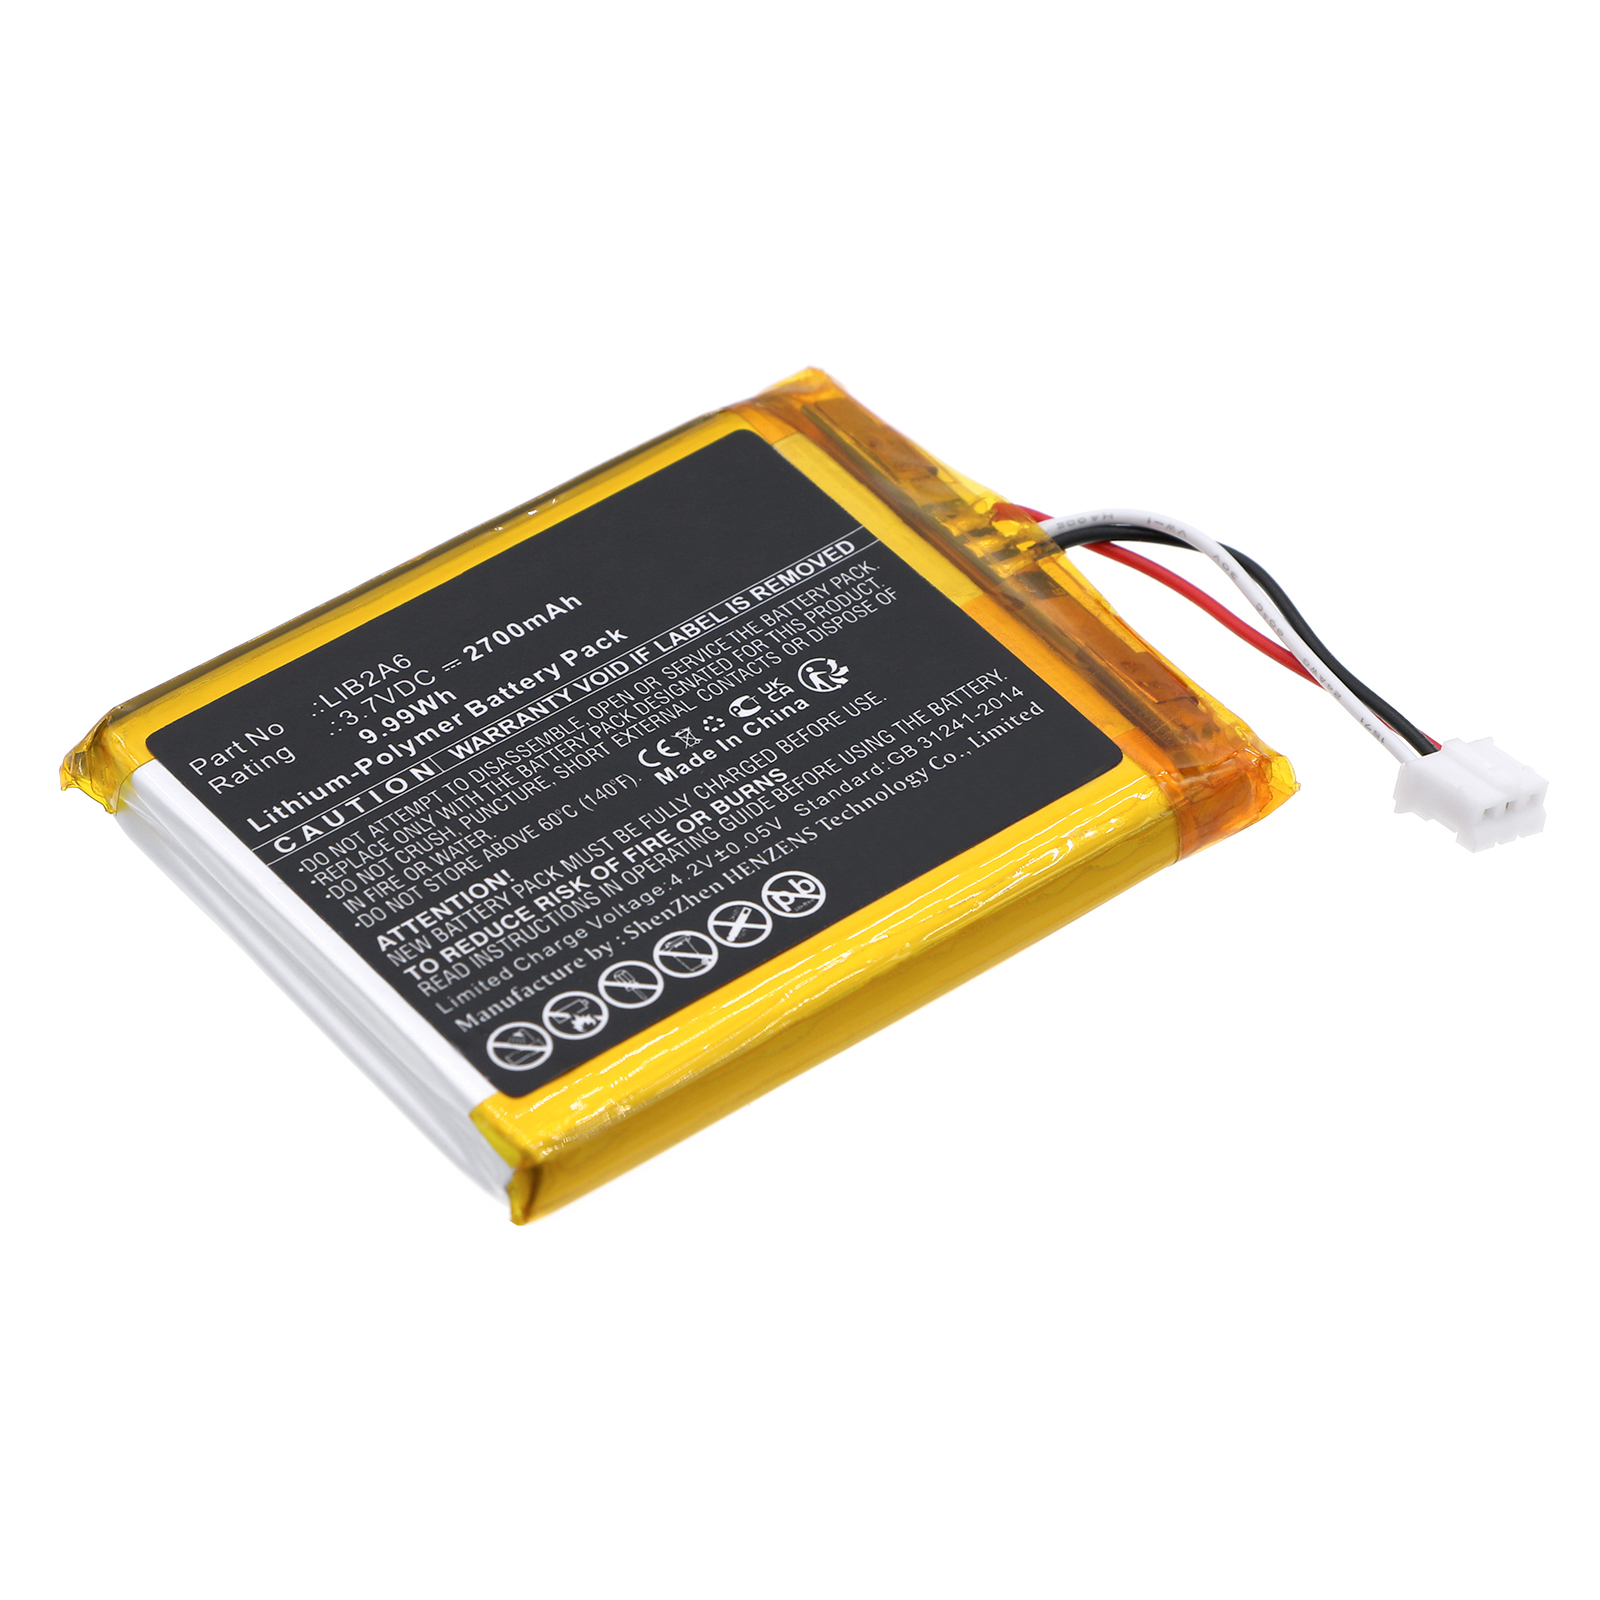 Synergy Digital Alarm System Battery, Compatible with DSC LIB2A6 Alarm System Battery (Li-Pol, 3.7V, 2700mAh)